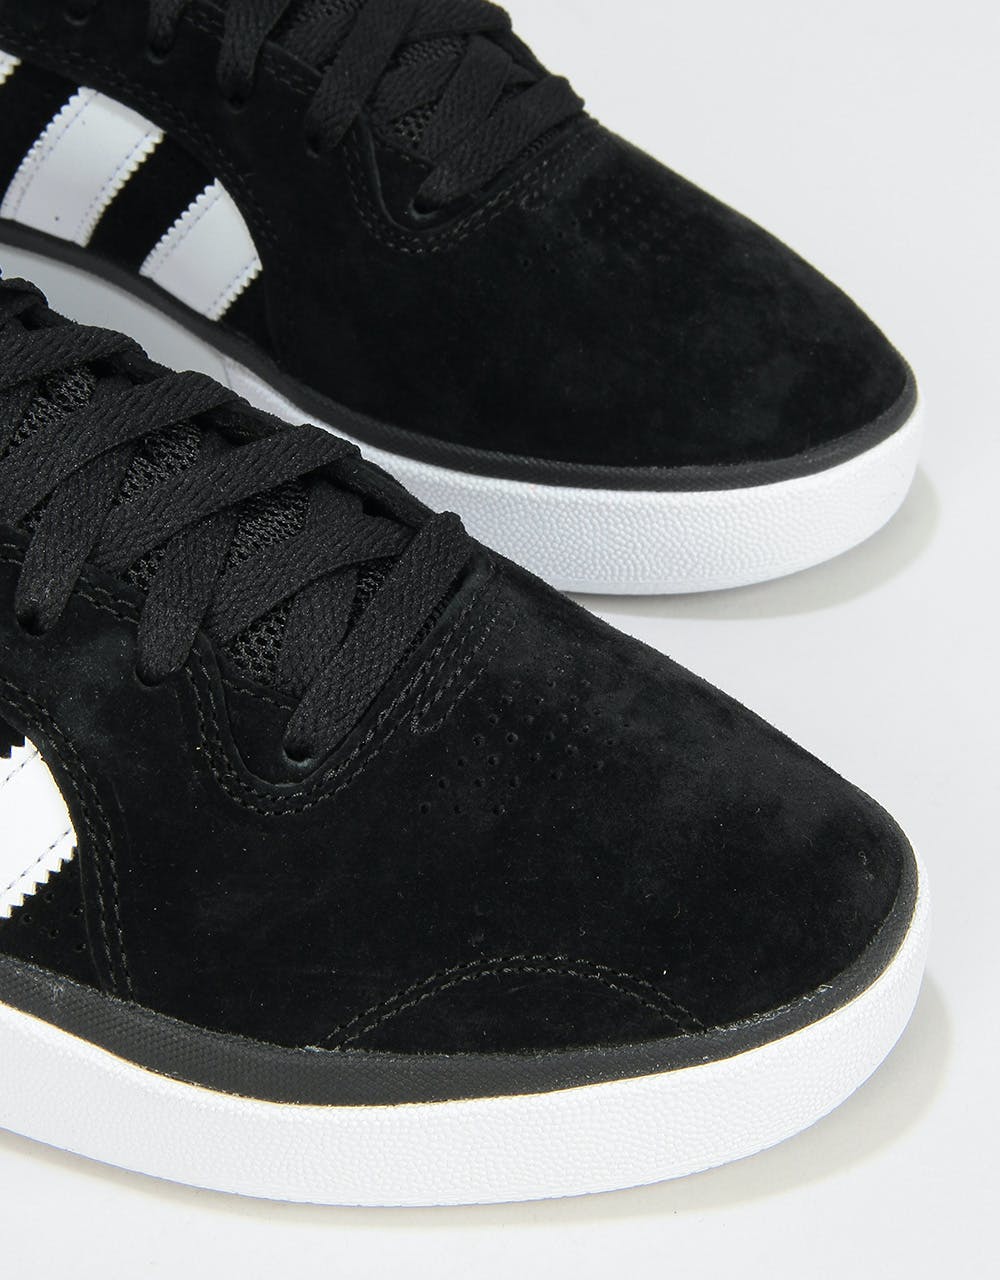 Adidas Tyshawn Skate Shoes - Core Black/White/Light Blue